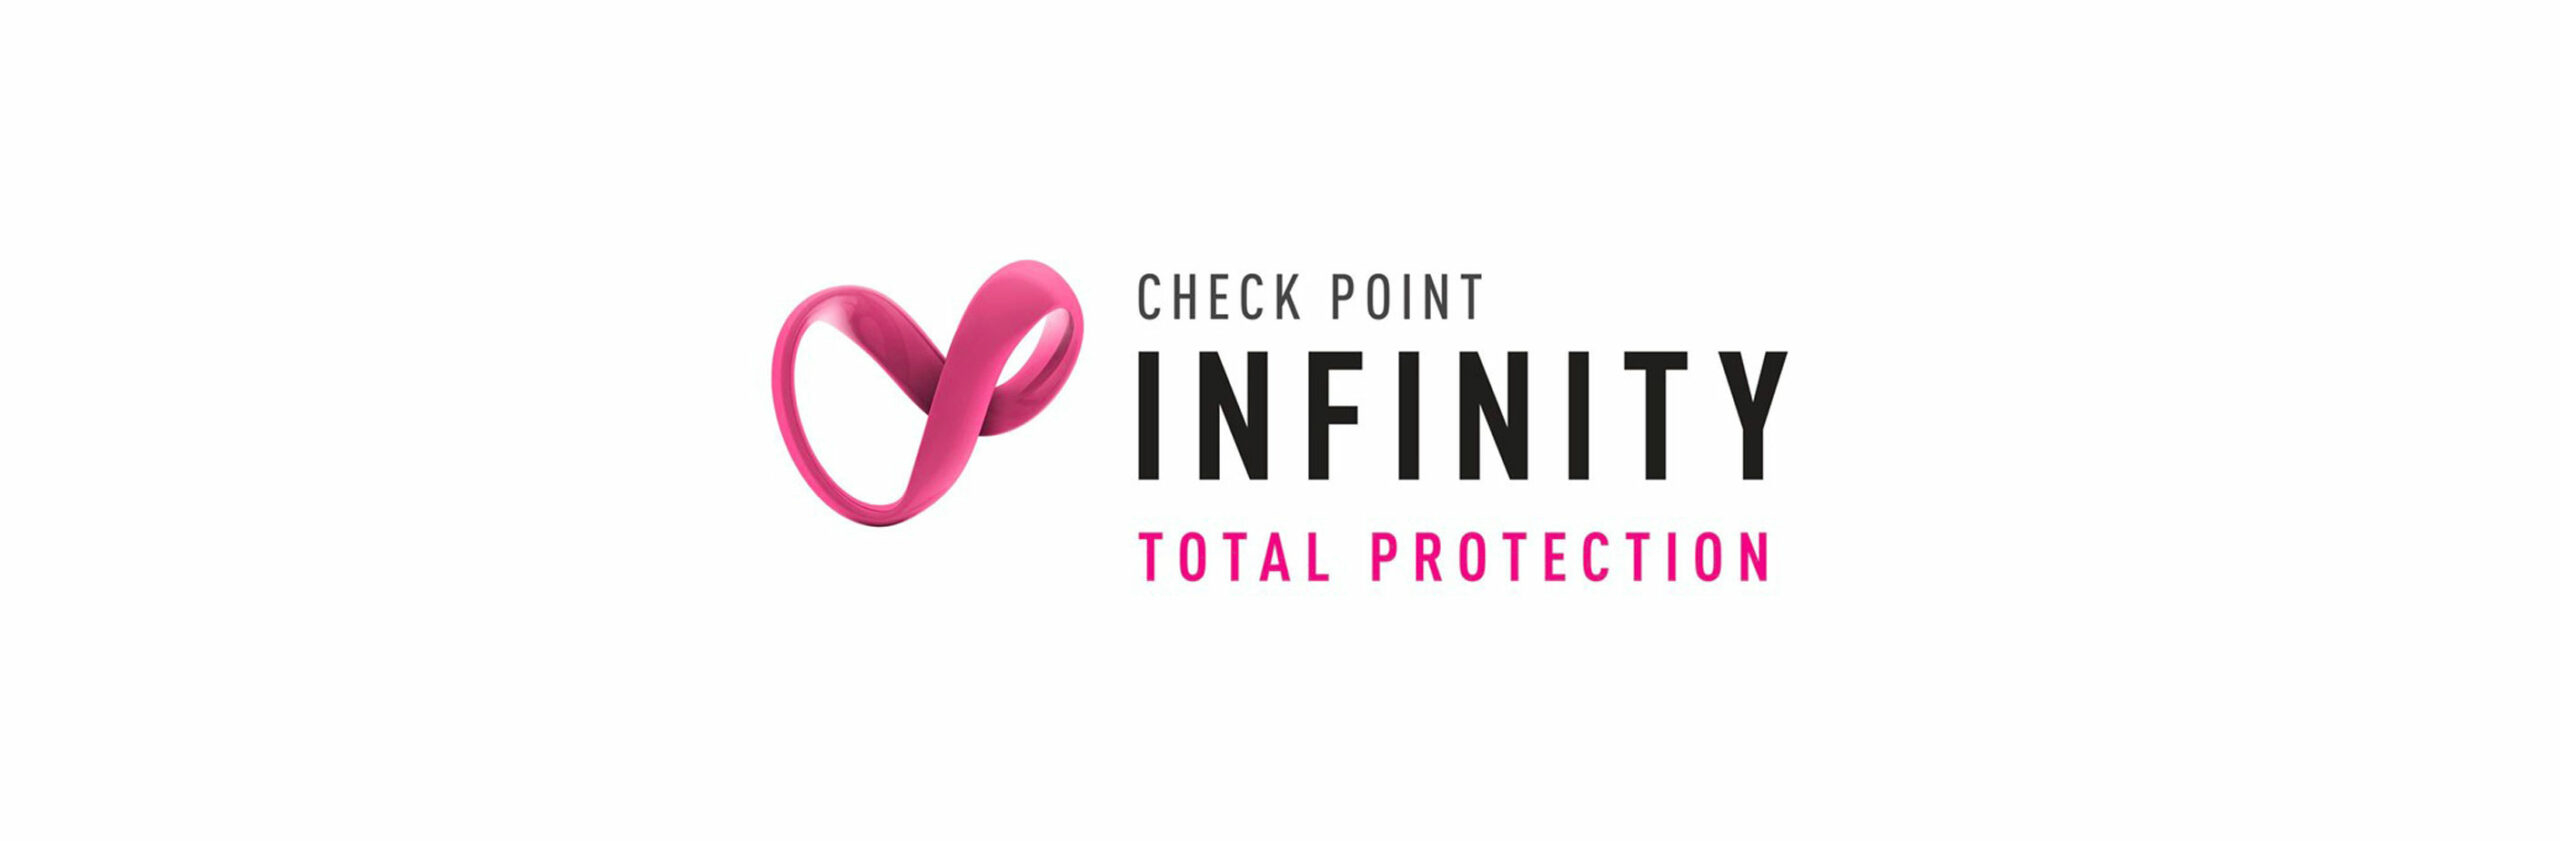 Go Zero Trust with Check Point Infinity